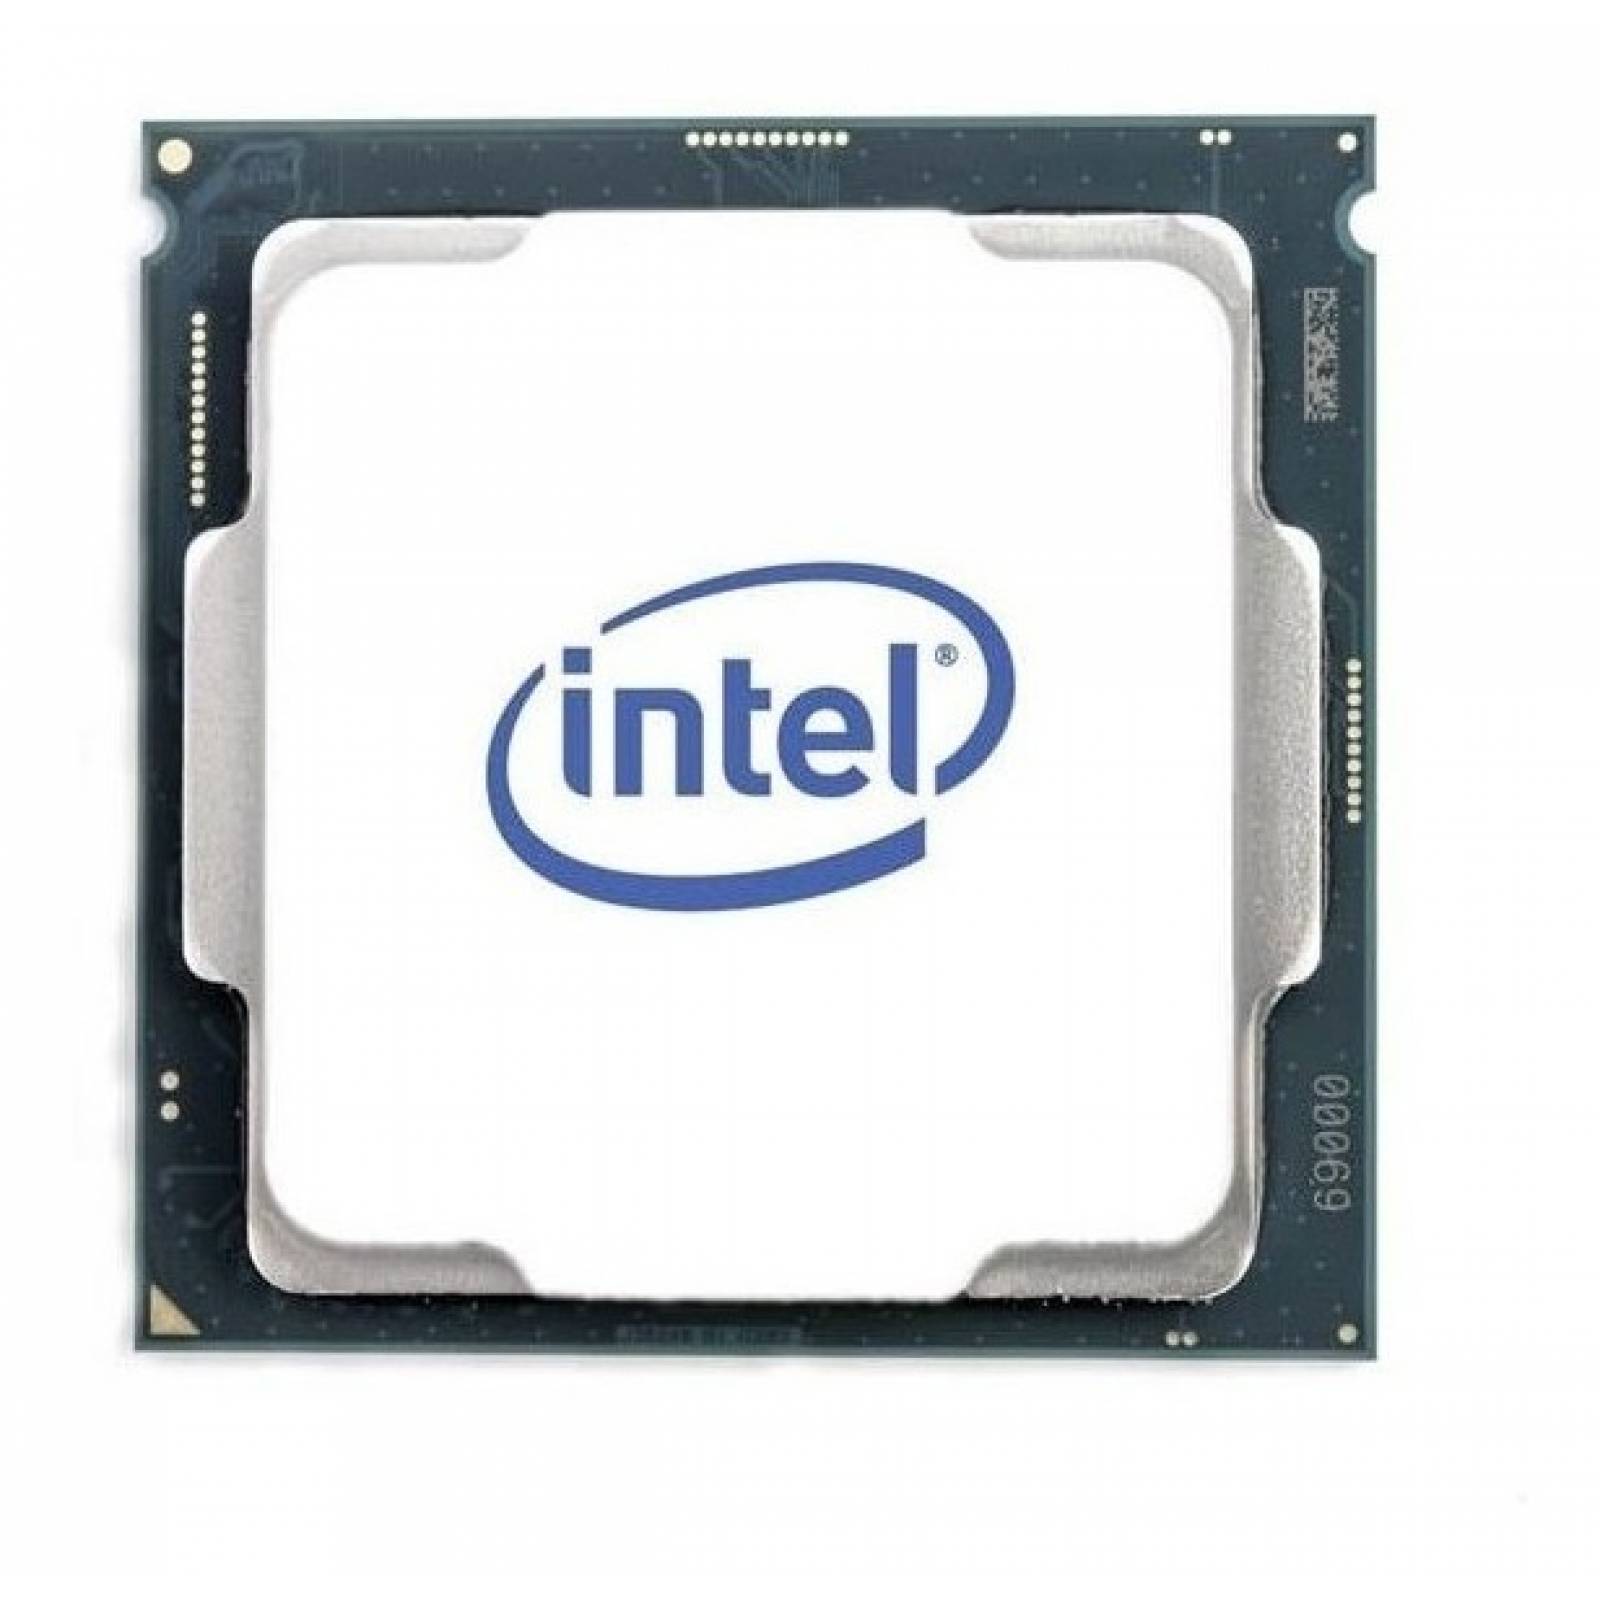 Procesador Intel Core I7-10700f, S-1200, 2.90ghz, 8-core